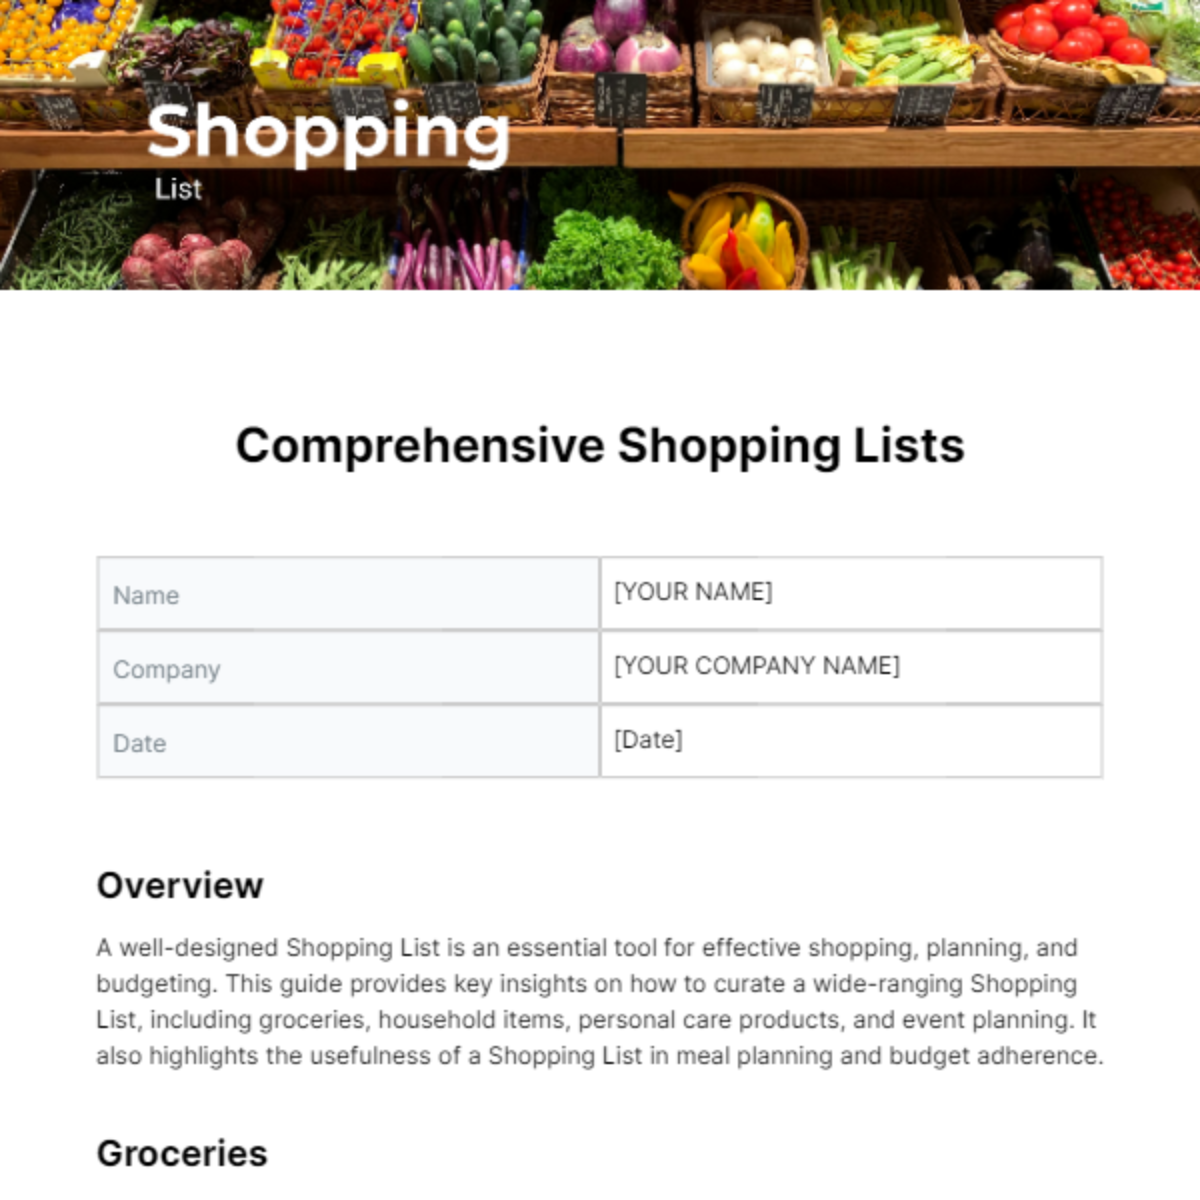 Shopping List Template